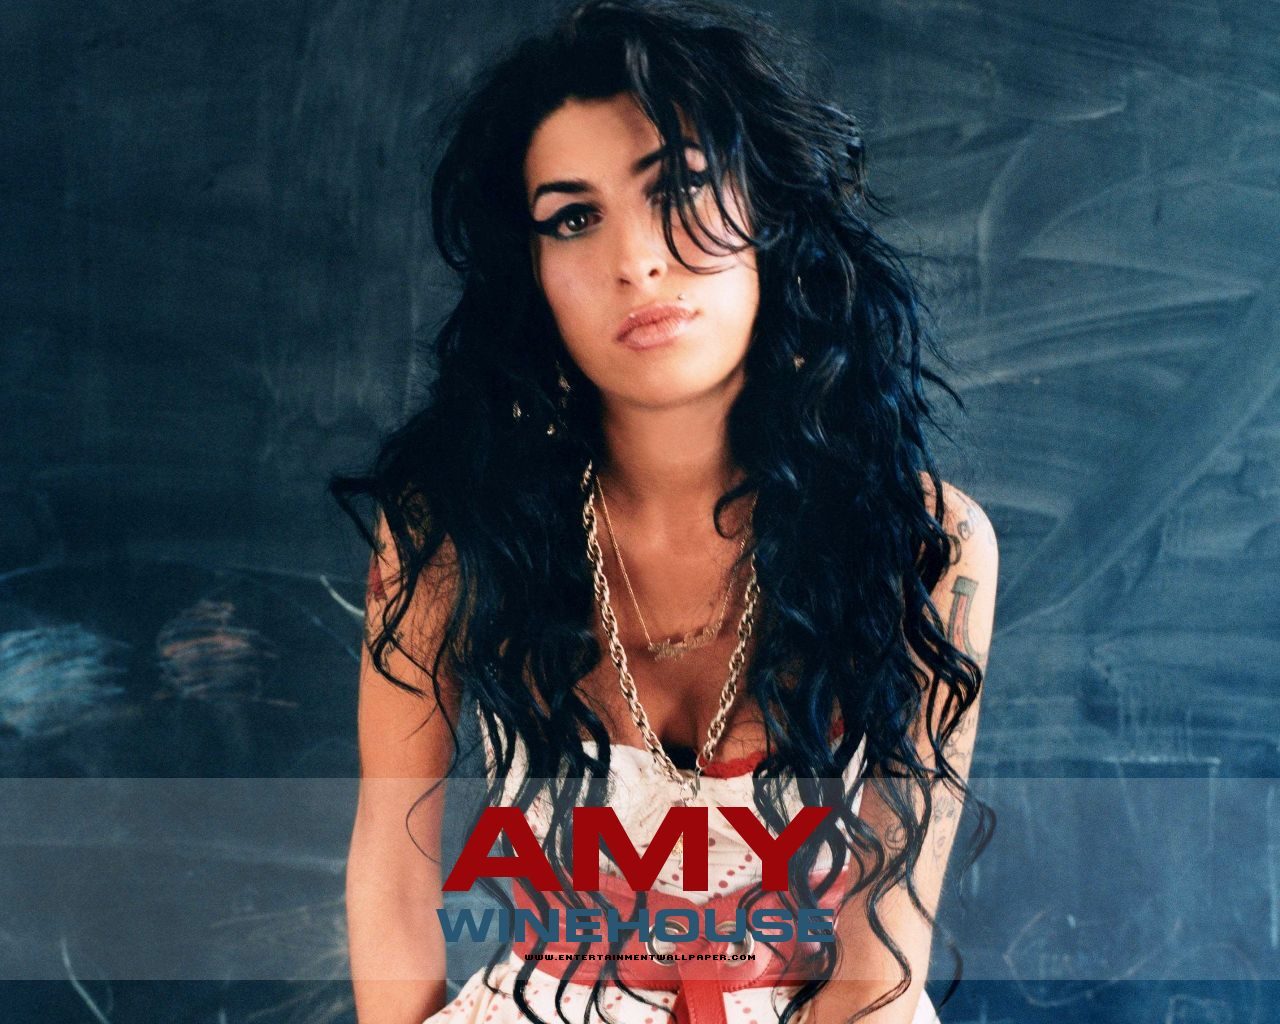 Fond d'ecran Amy Winehouse chanteuse